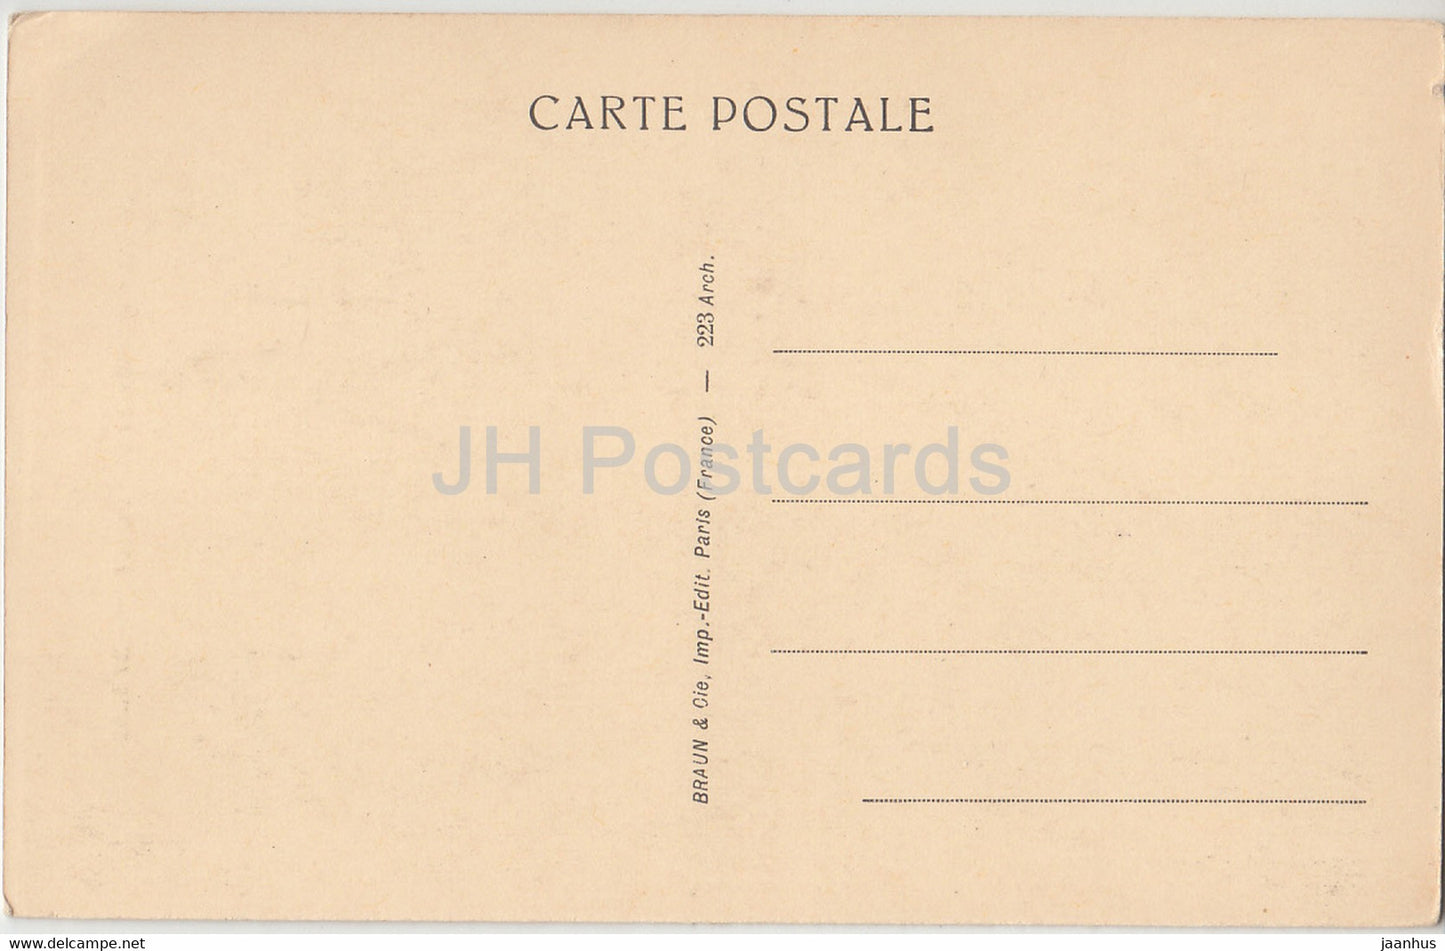 Amiens - La Cathedrale - Facade - Moyen Age - cathedral - old postcard - France - unused